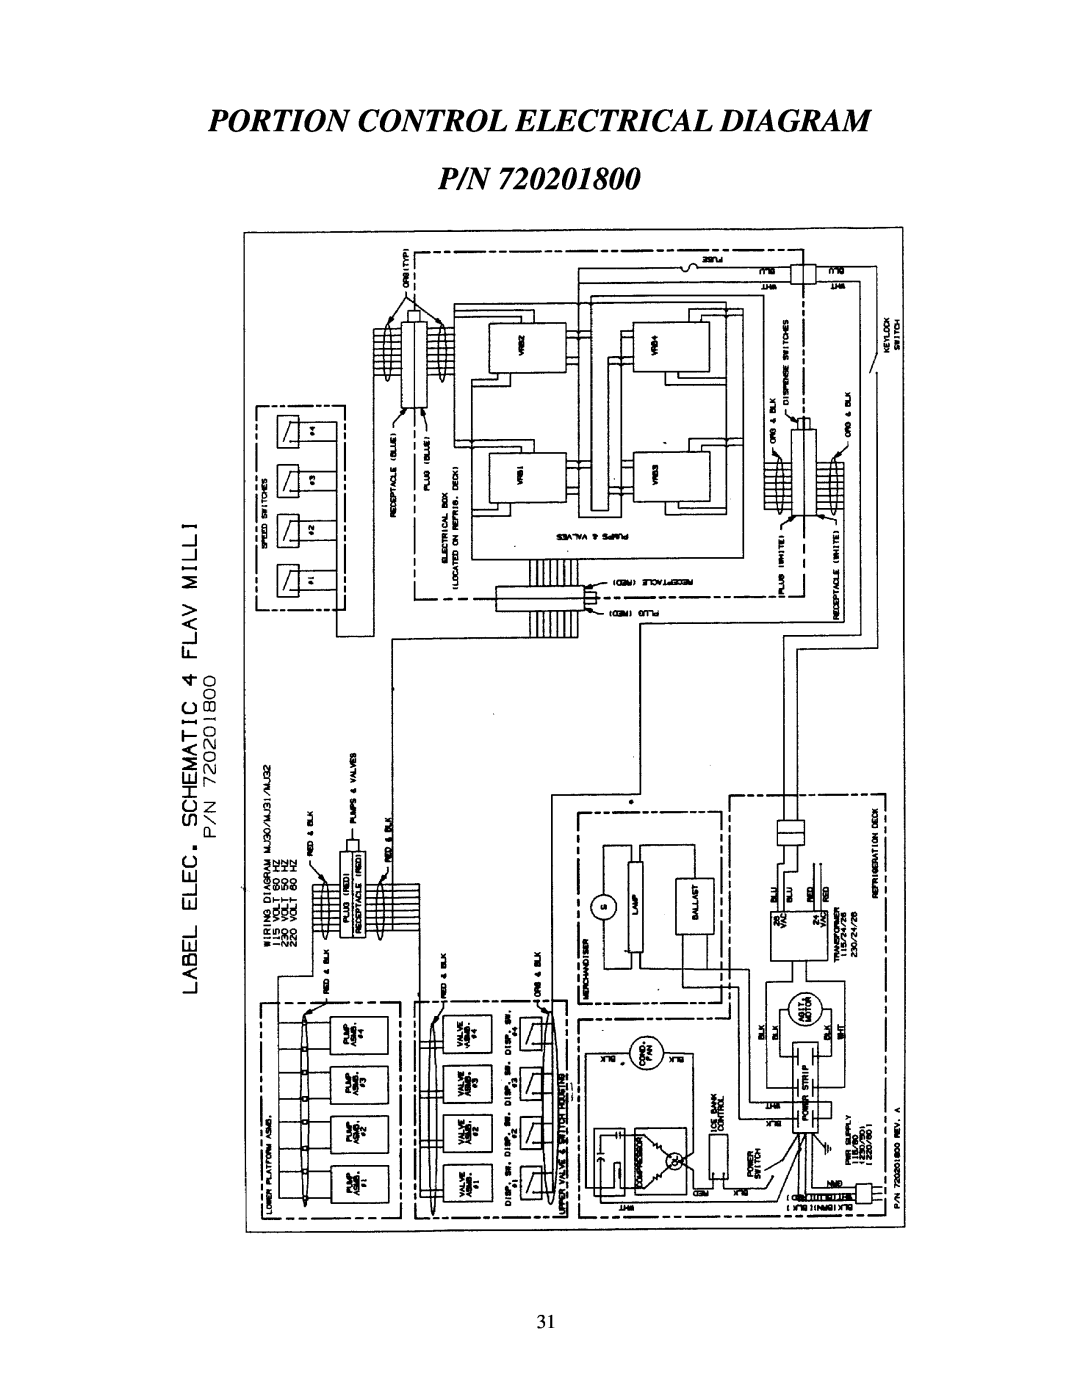 Cornelius MJ30-4 PB, MJ32-4 PB, MJ32-4 PC, MJ30-4 PC, MJ31-4 PB, MJ31-4 PC service manual Portion Control Electrical Diagram 